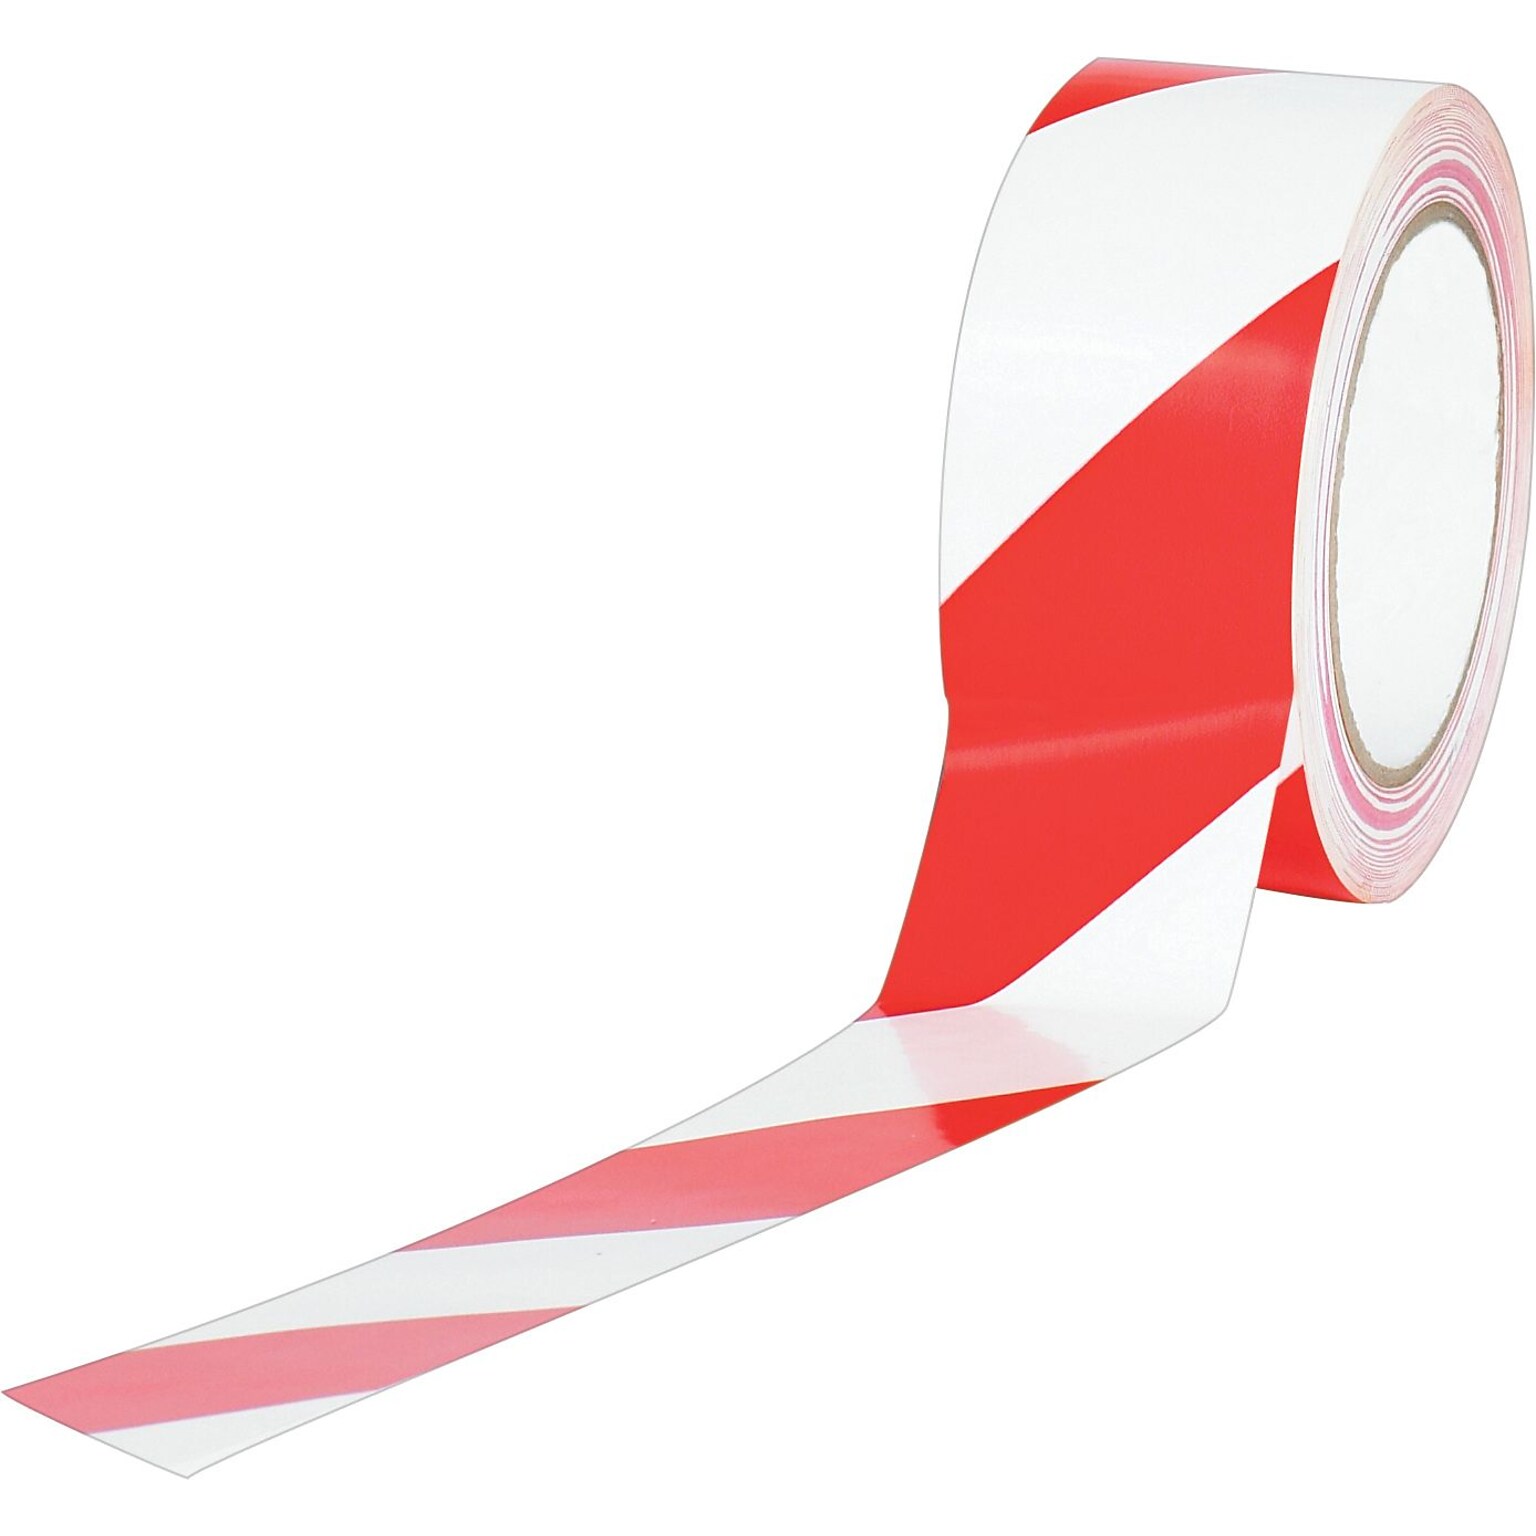 Industrial Vinyl Safety Tape, 3 x 36 yds., Red/White Striped, 16/Carton (TSTT9336RW)